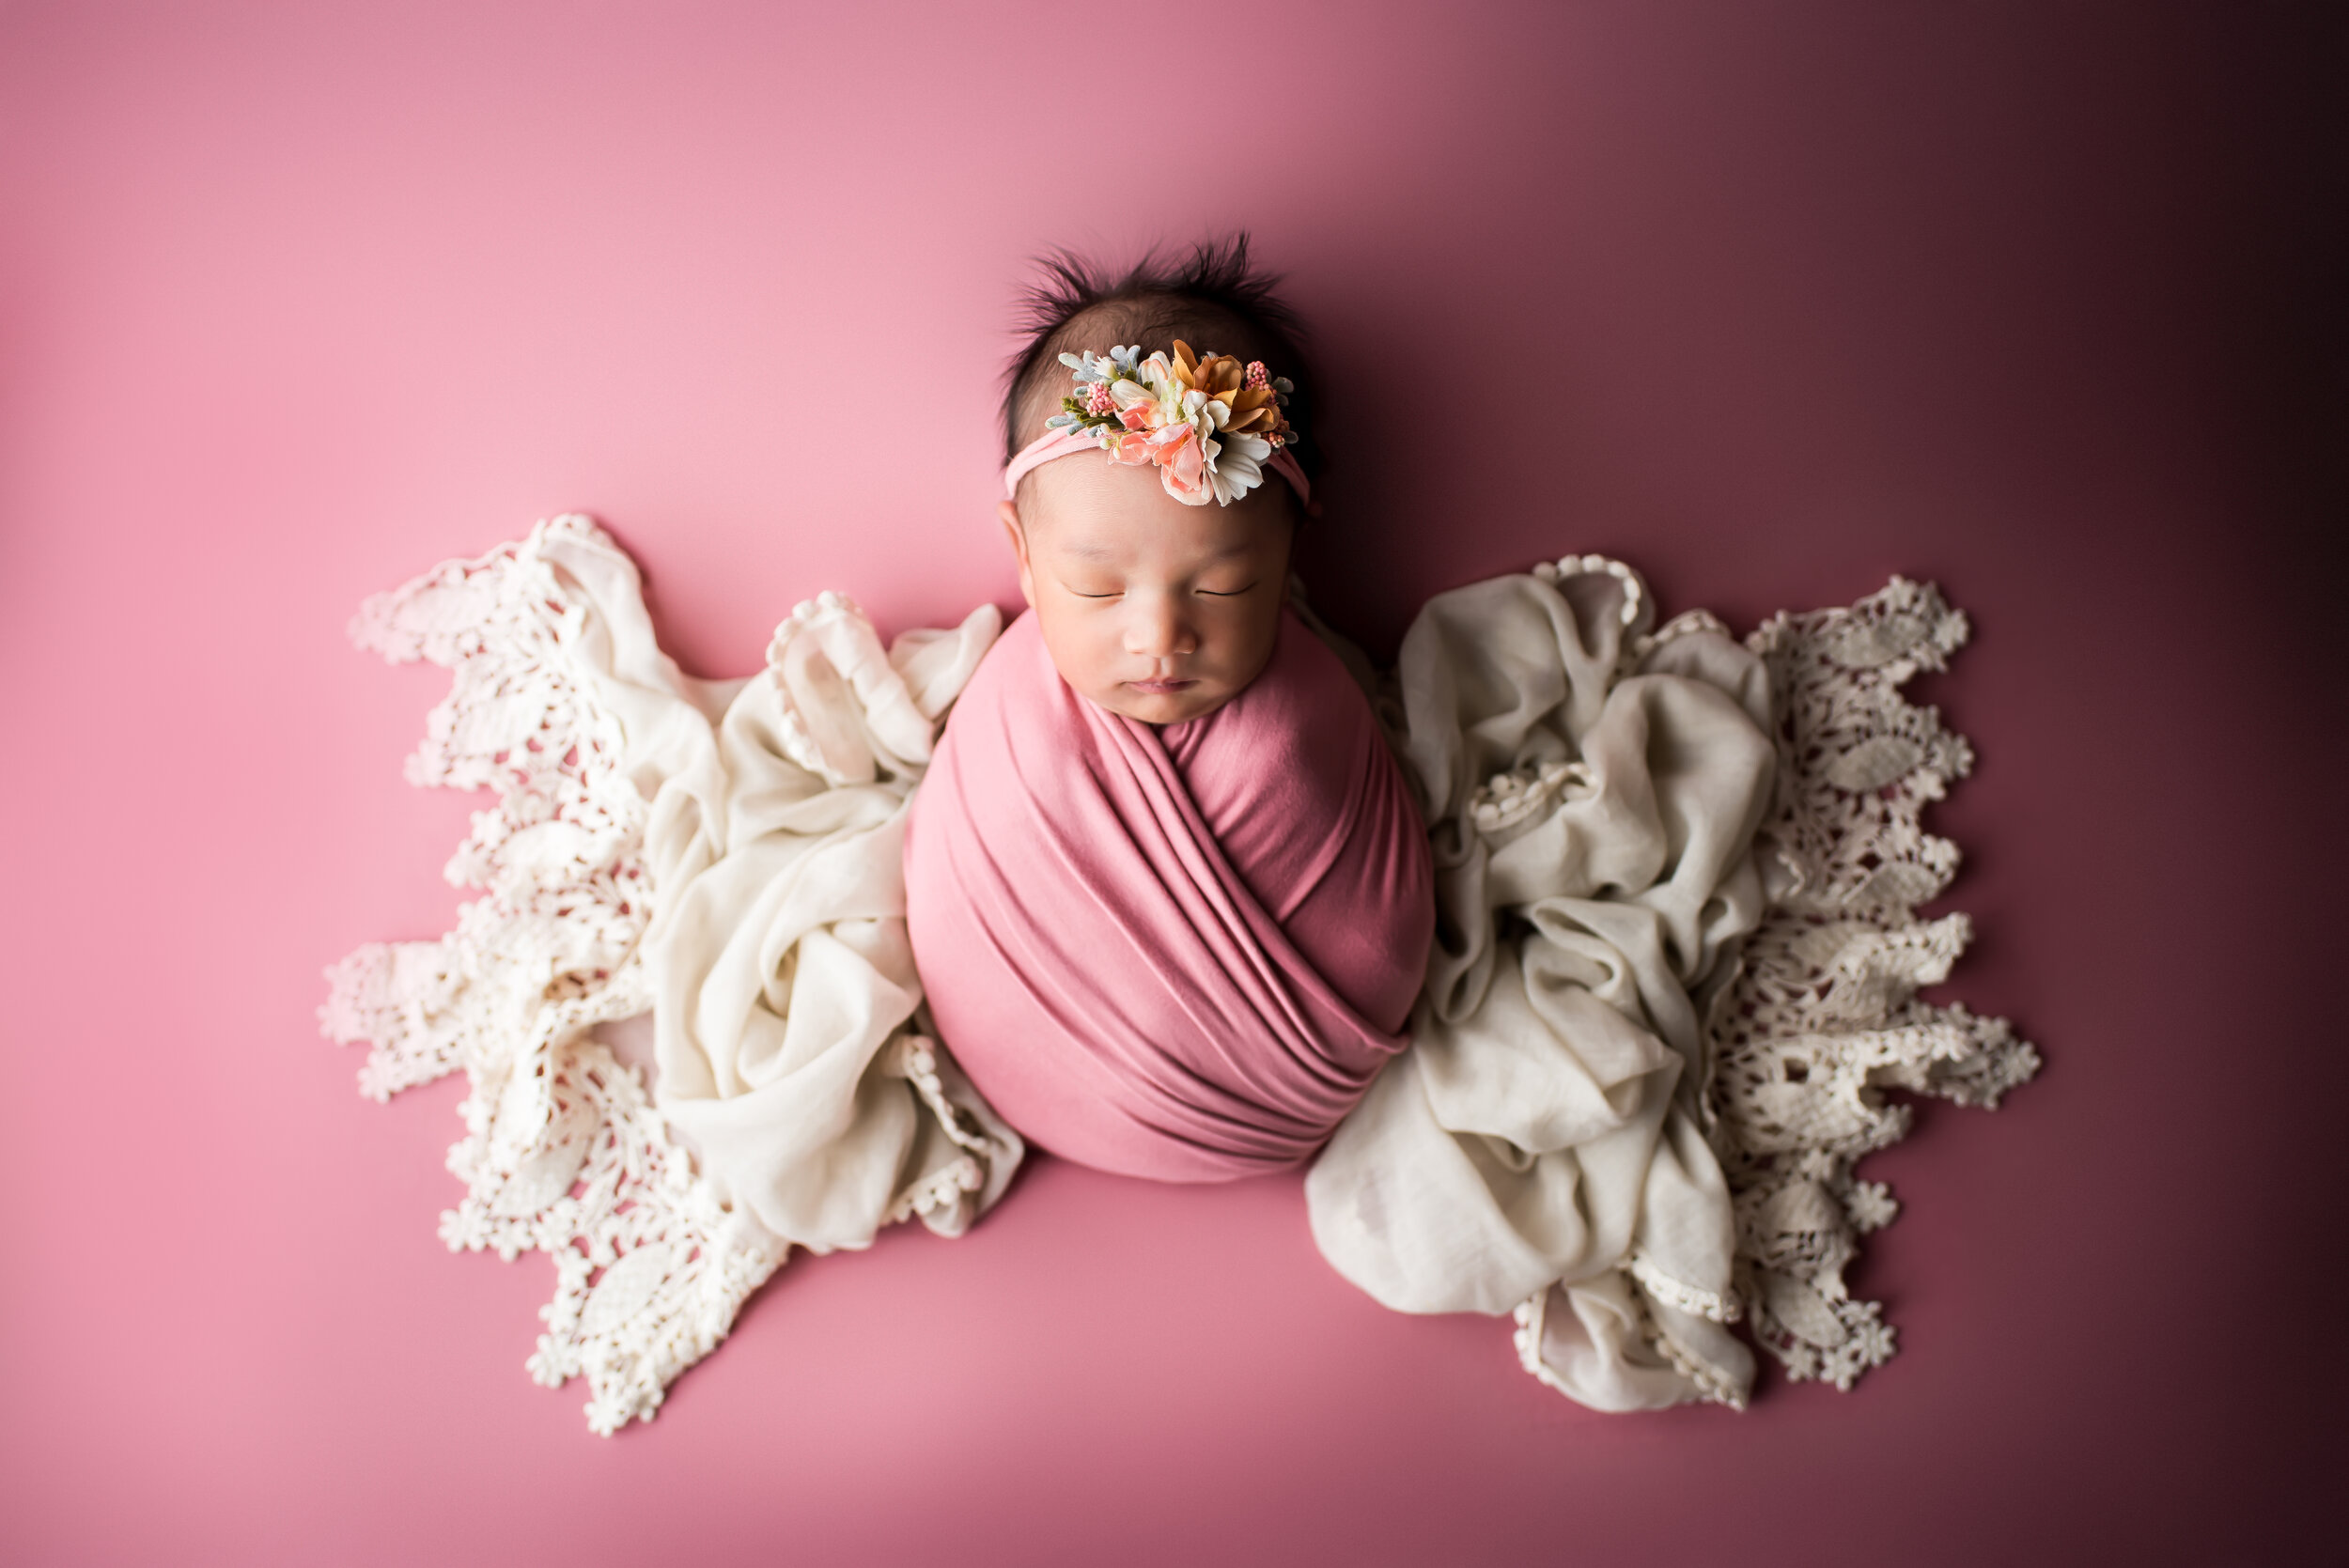 Newborn girl portrait